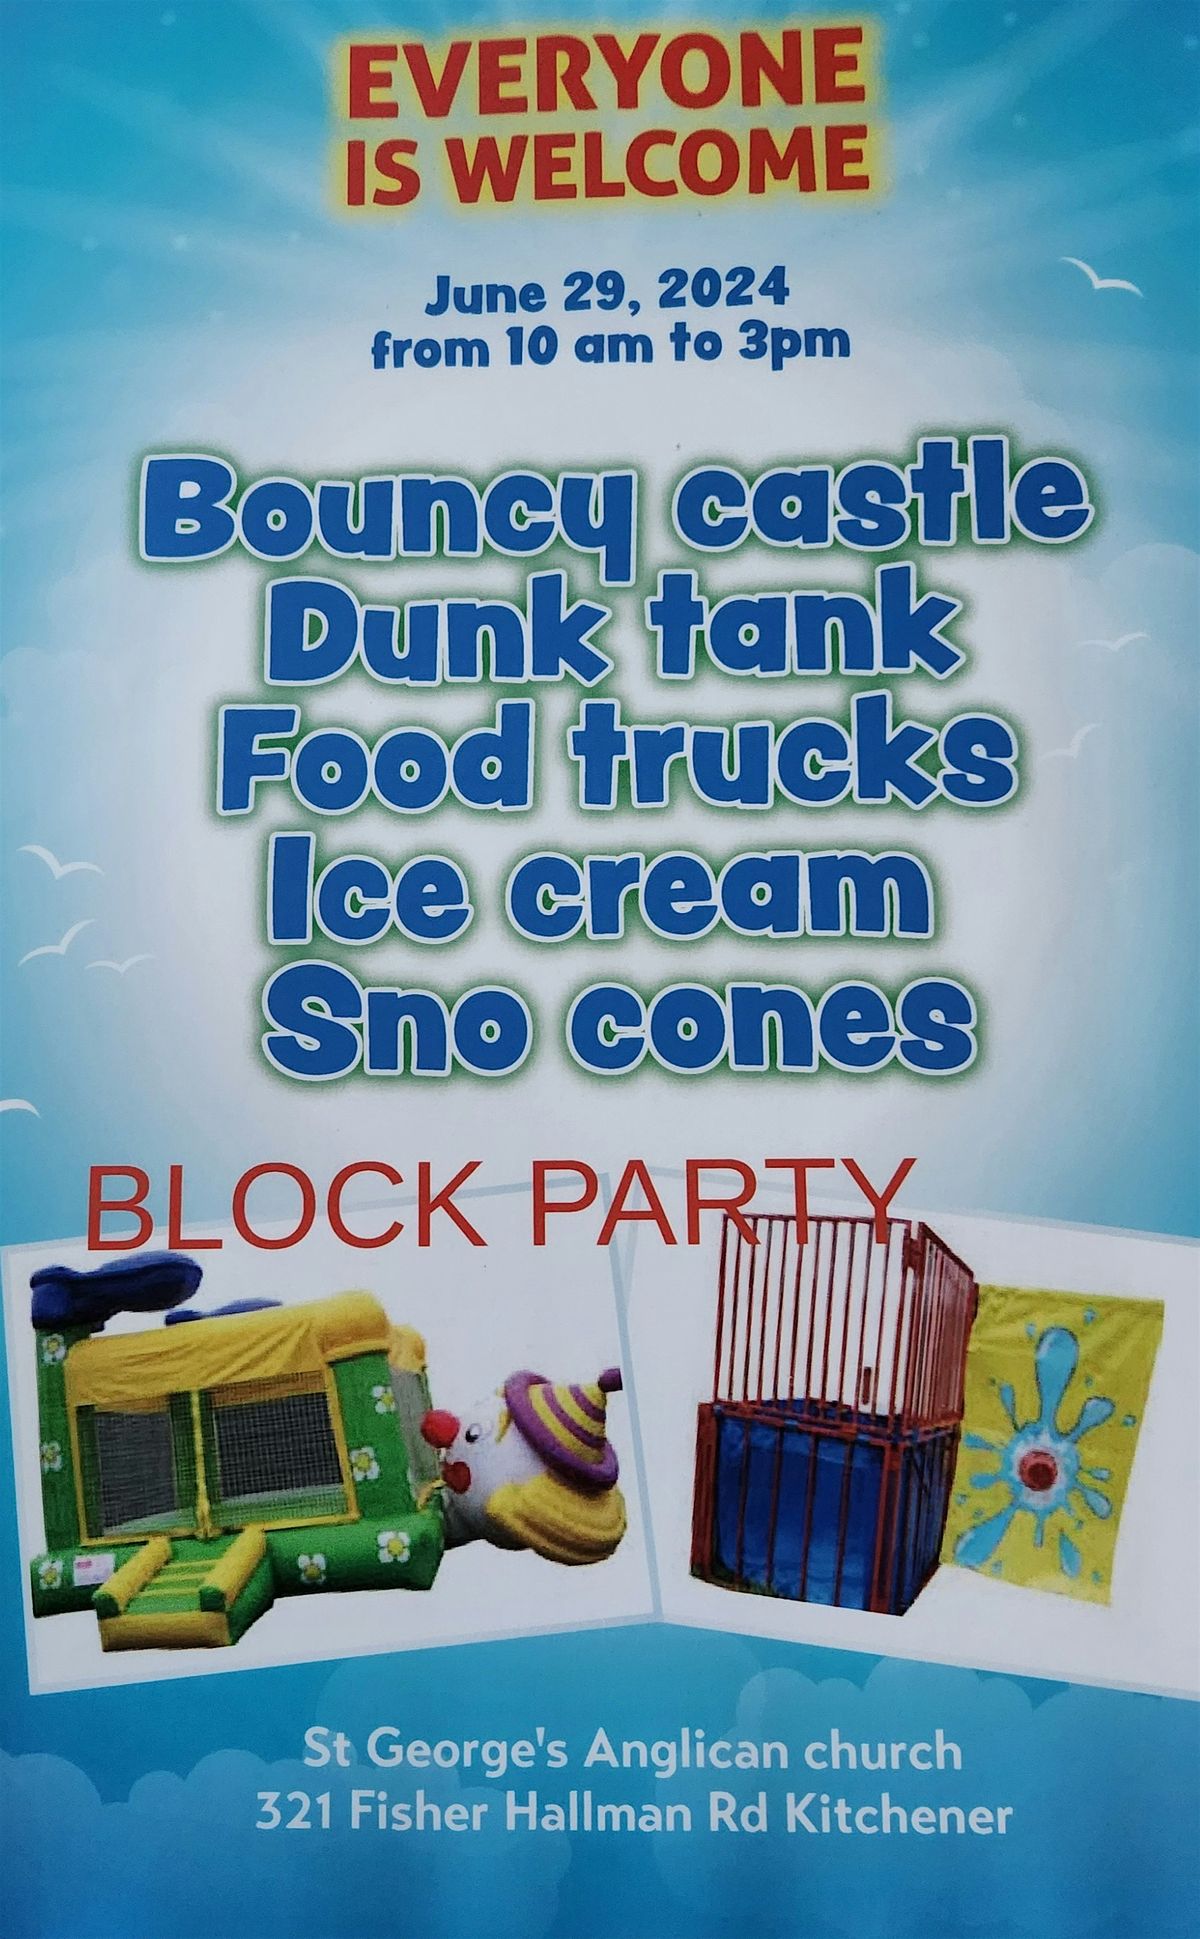 Block Party Fun 4 All